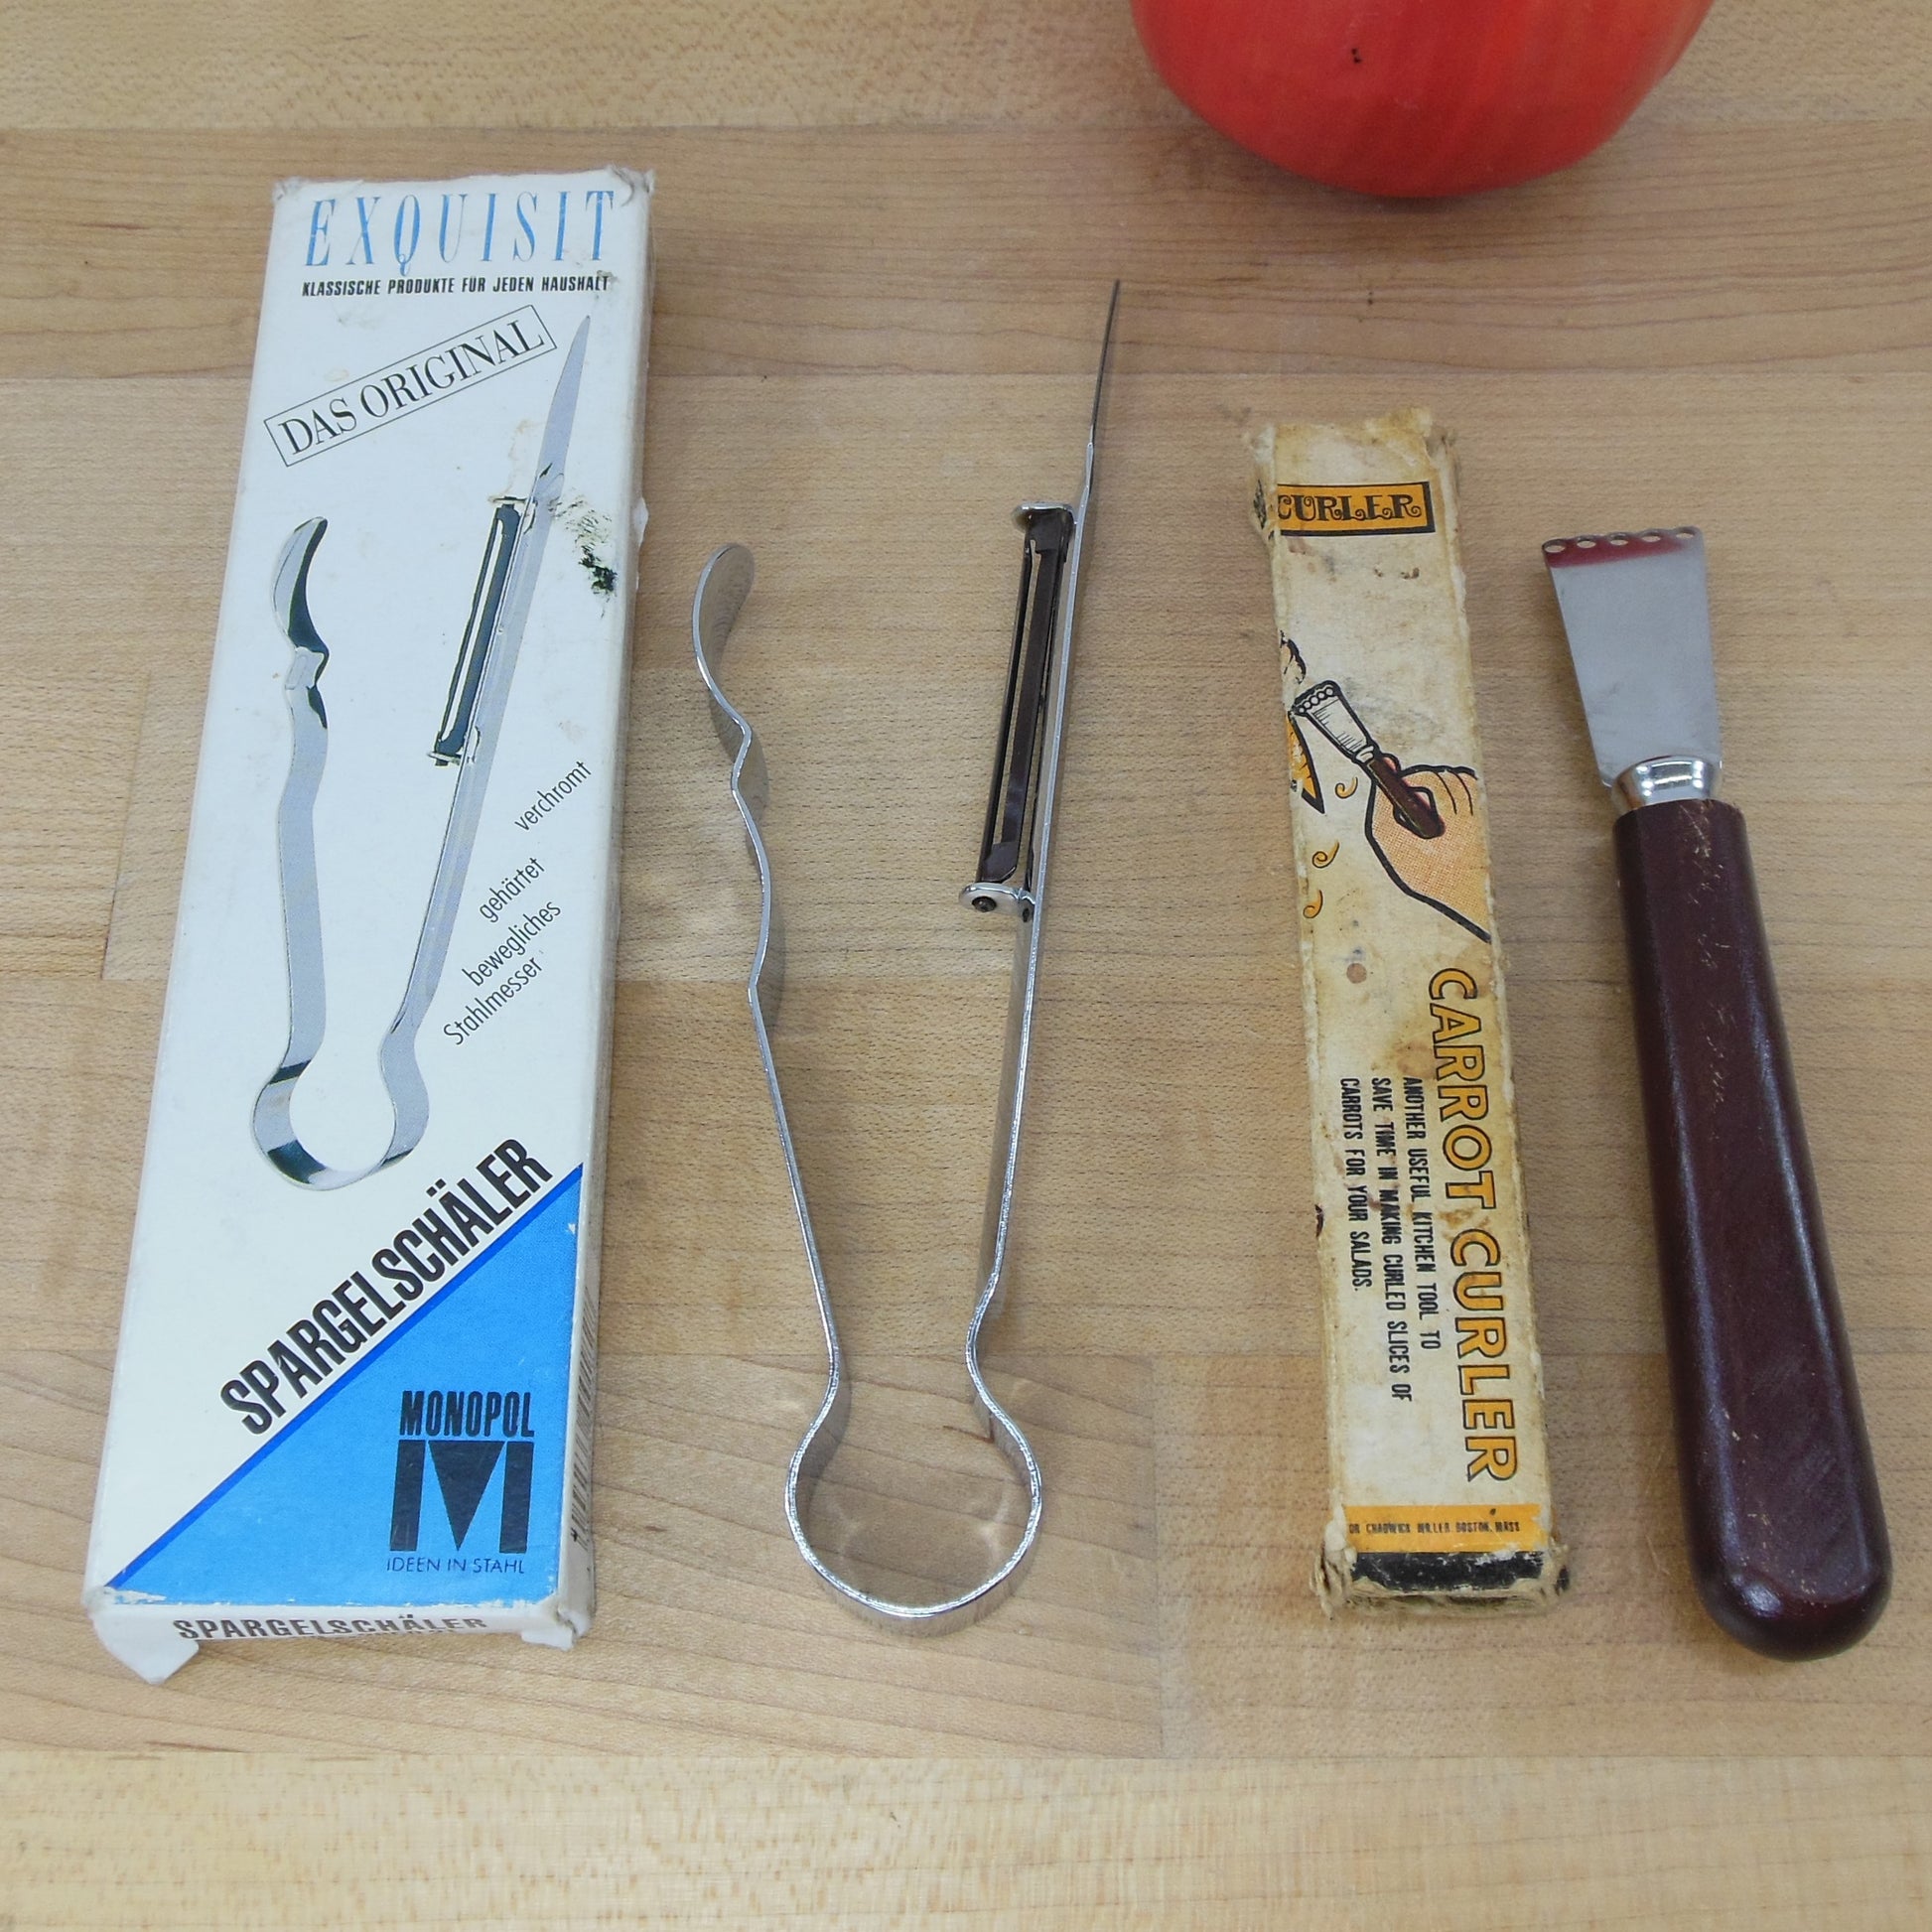 Monopol German Asparagus Peeler Knife & Japan Carrot Curler